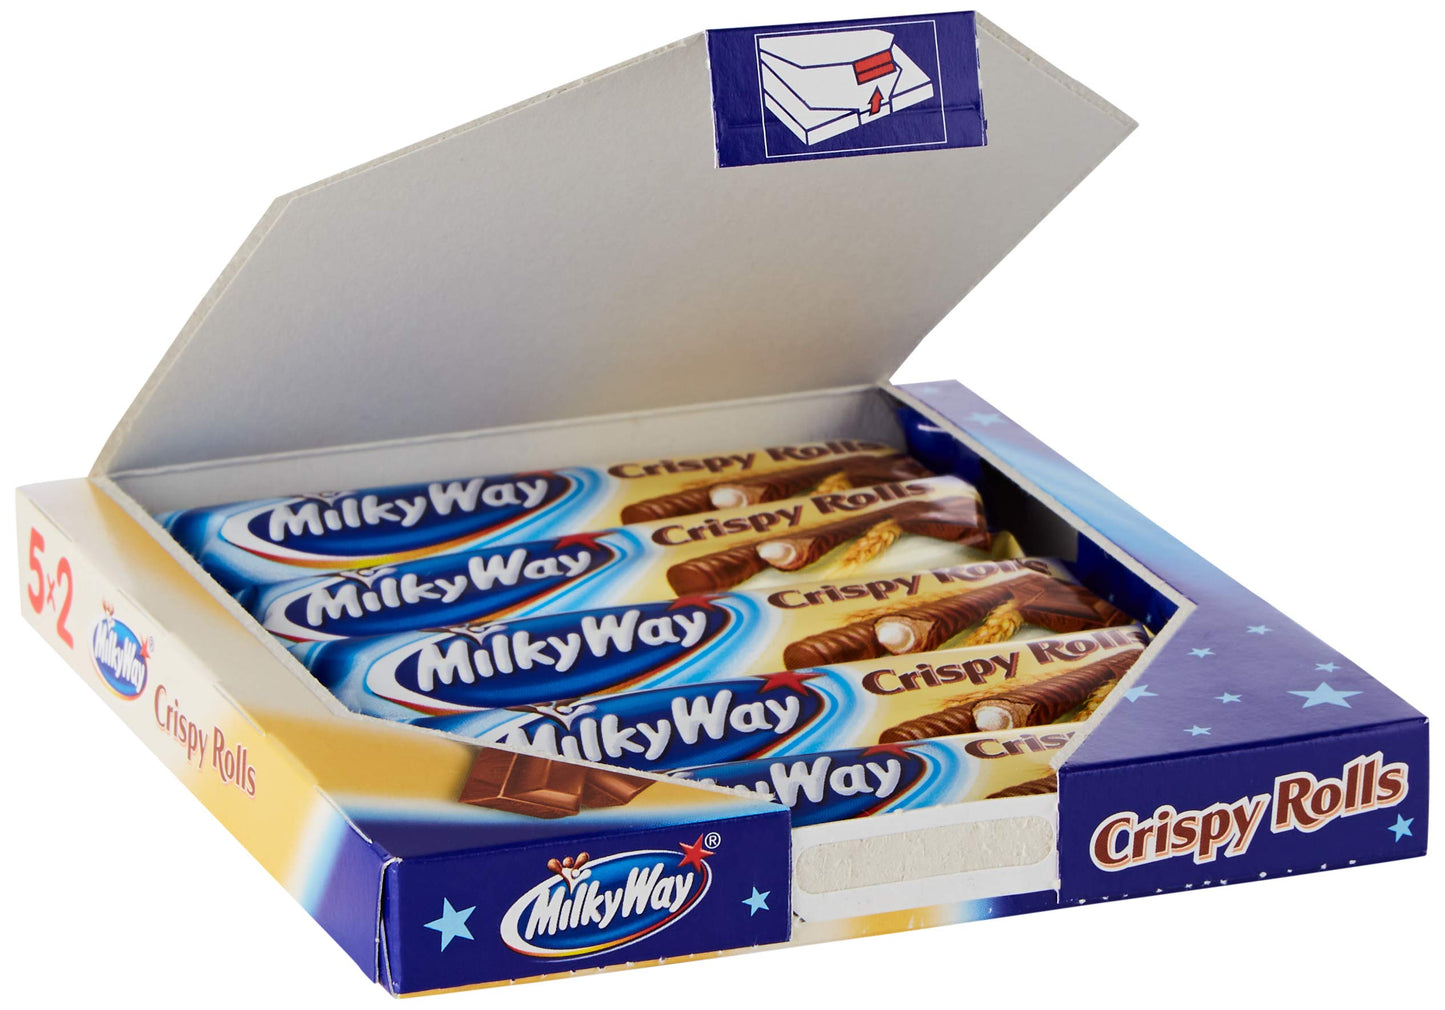 Milky Way Crispy Roll 22.5g (EU)